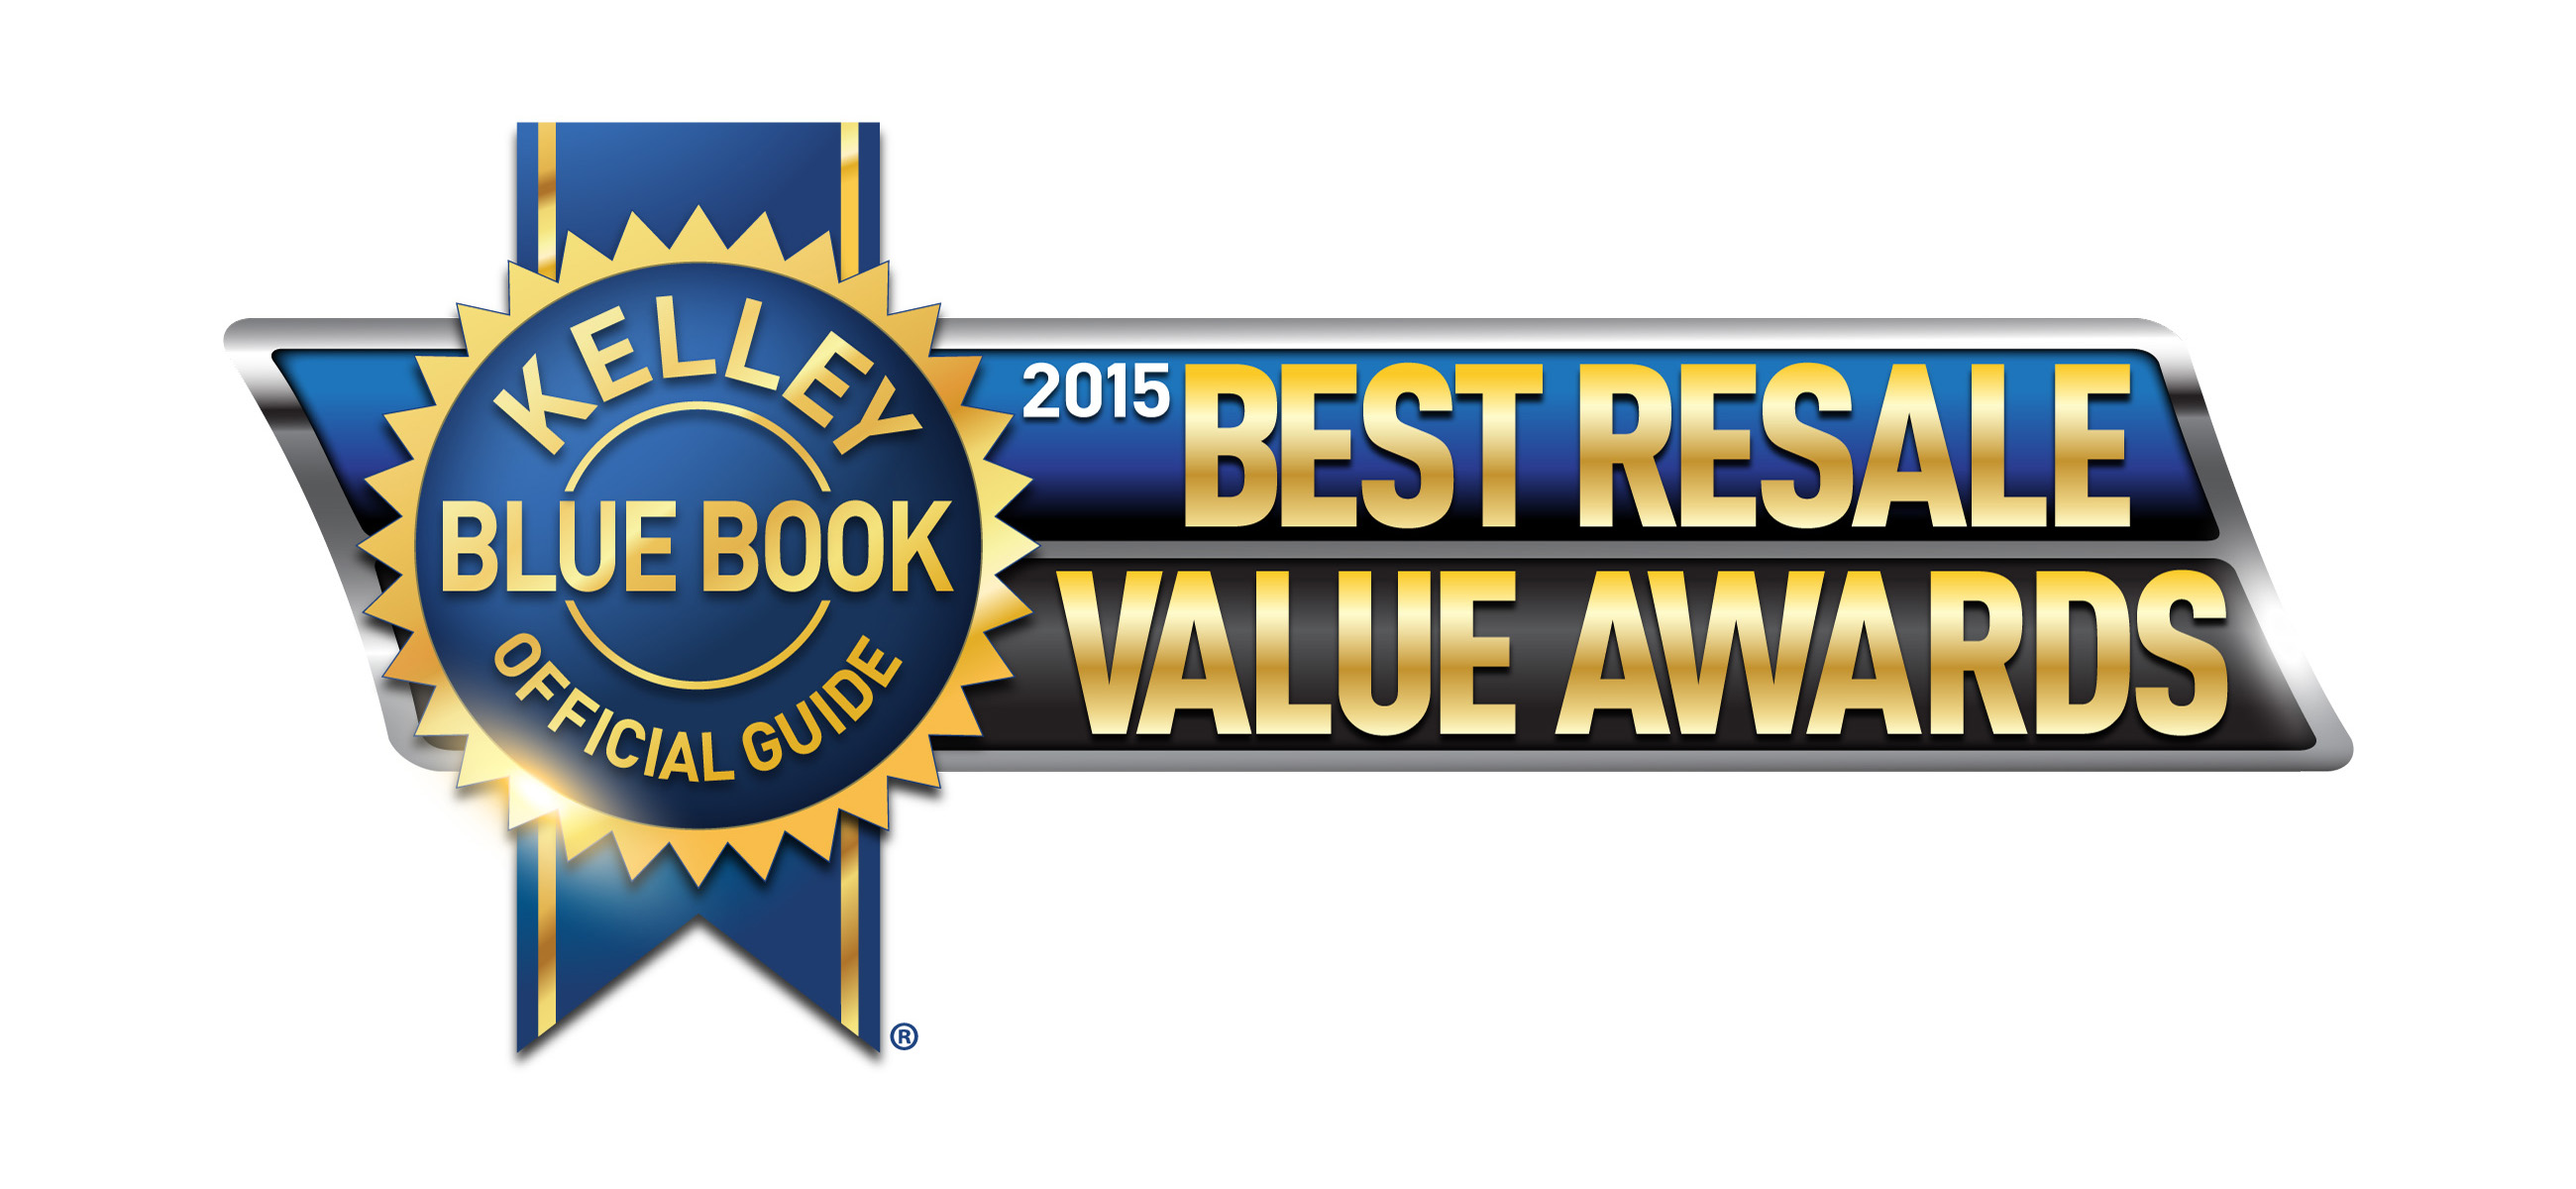 2015 Best Resale Value Award Winners Announced By Kelley Blue Book